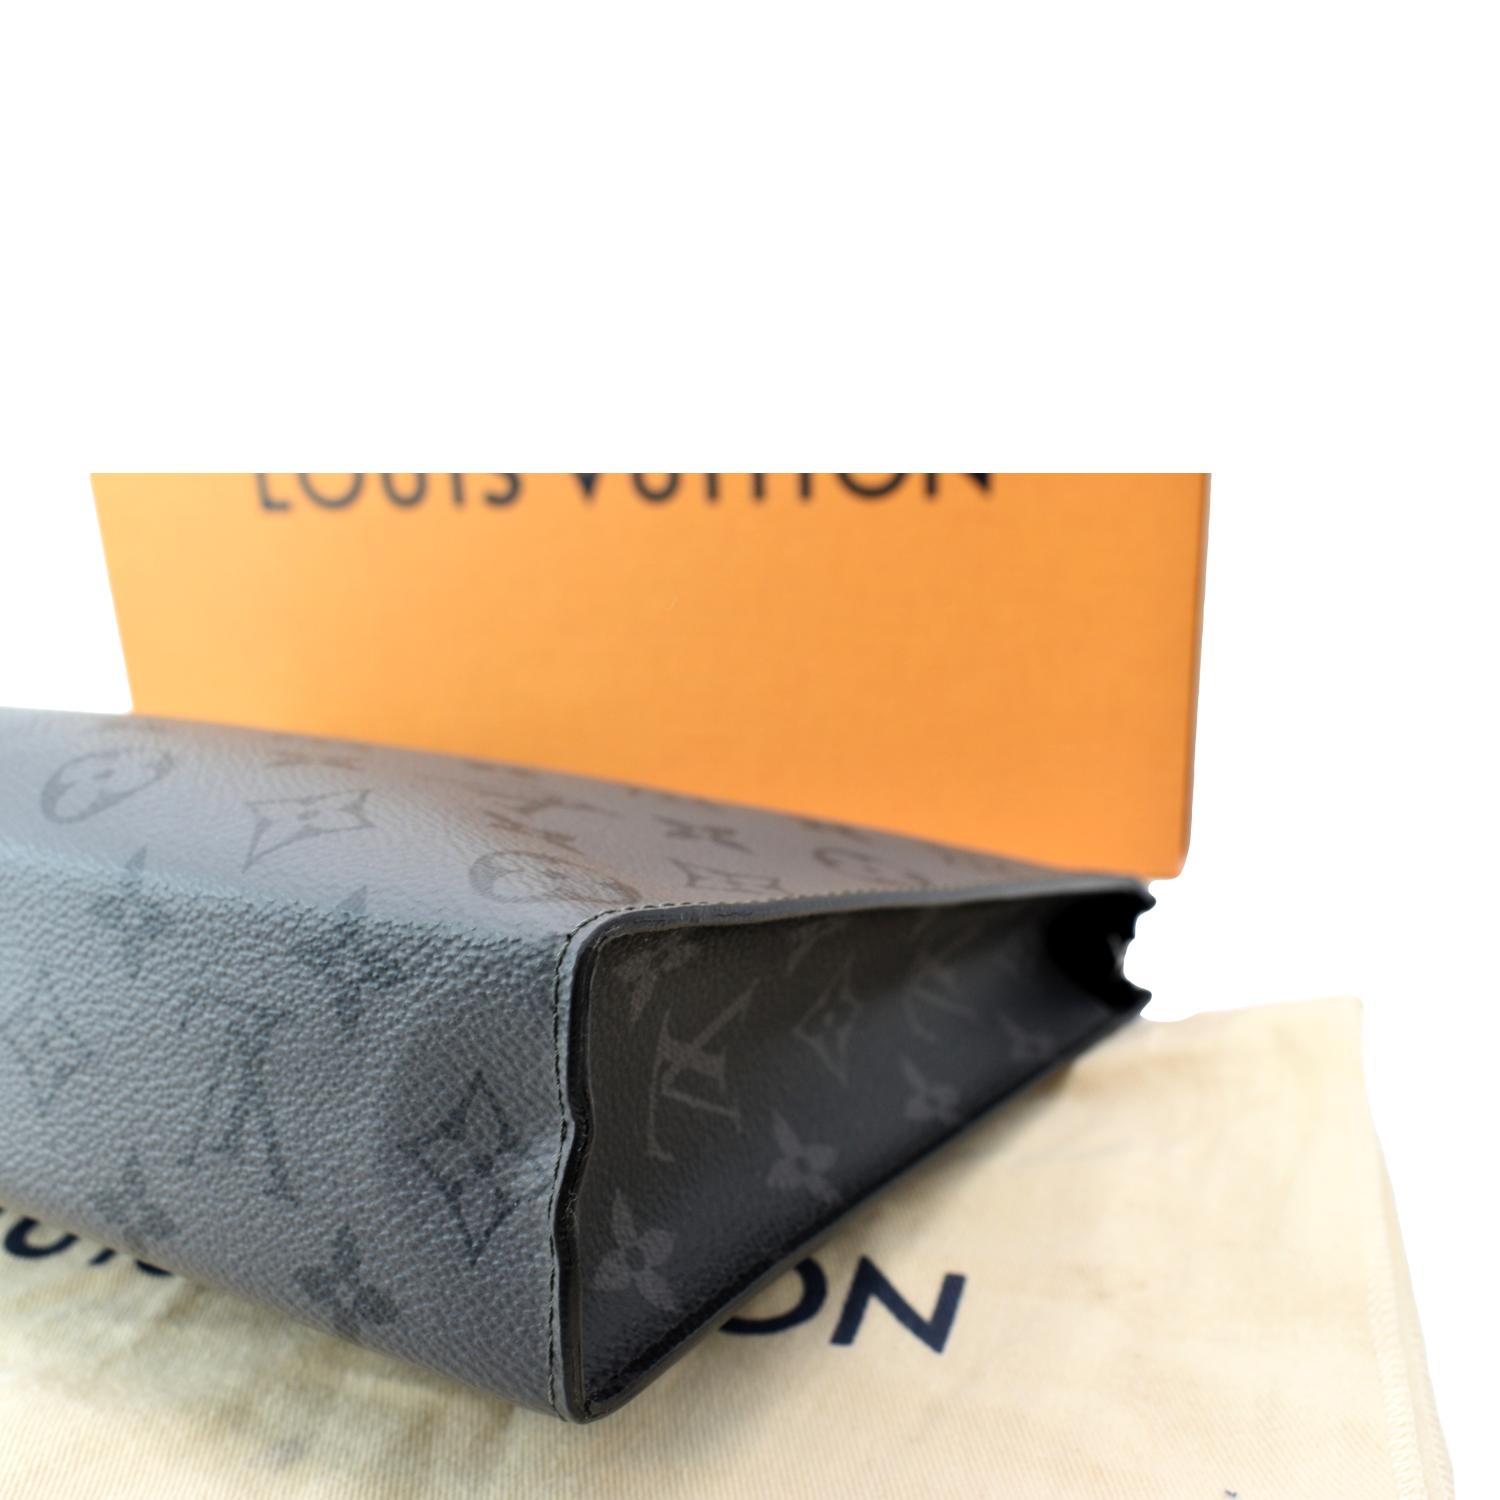 Black Louis Vuitton Monogram Galaxy Pochette Voyage MM Clutch Bag –  Designer Revival